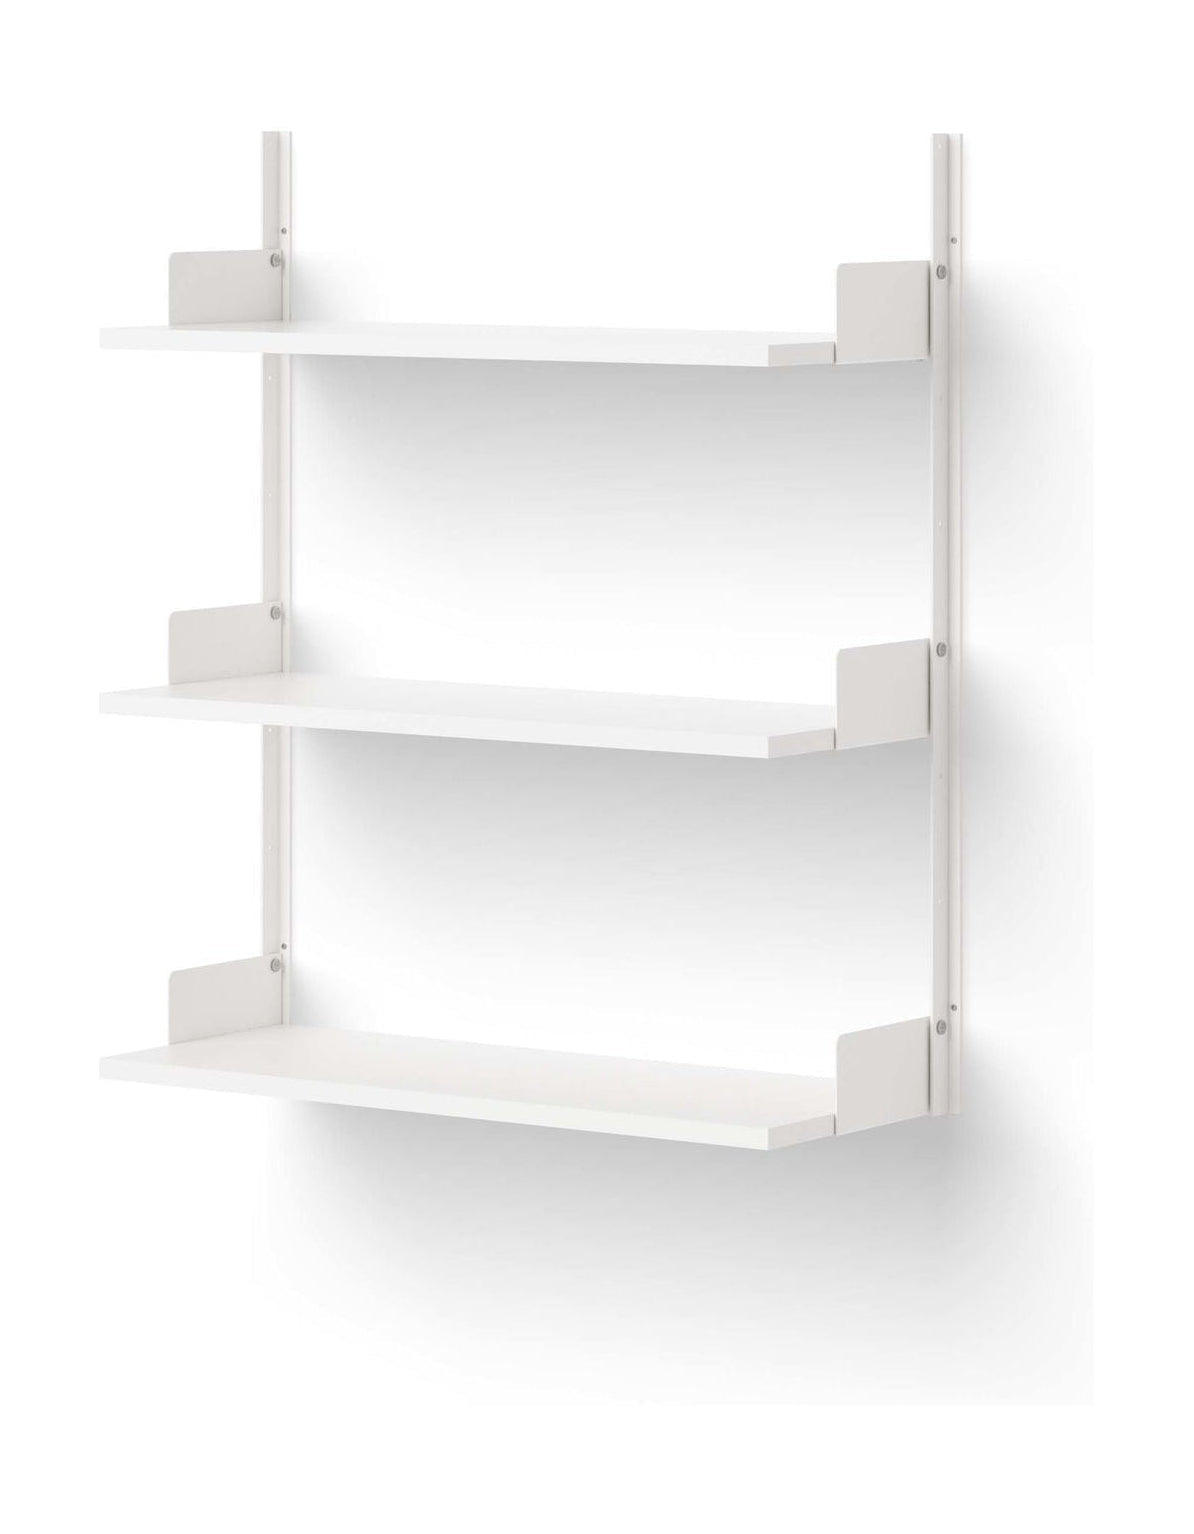 New Works Wall Shelf 900, White/White